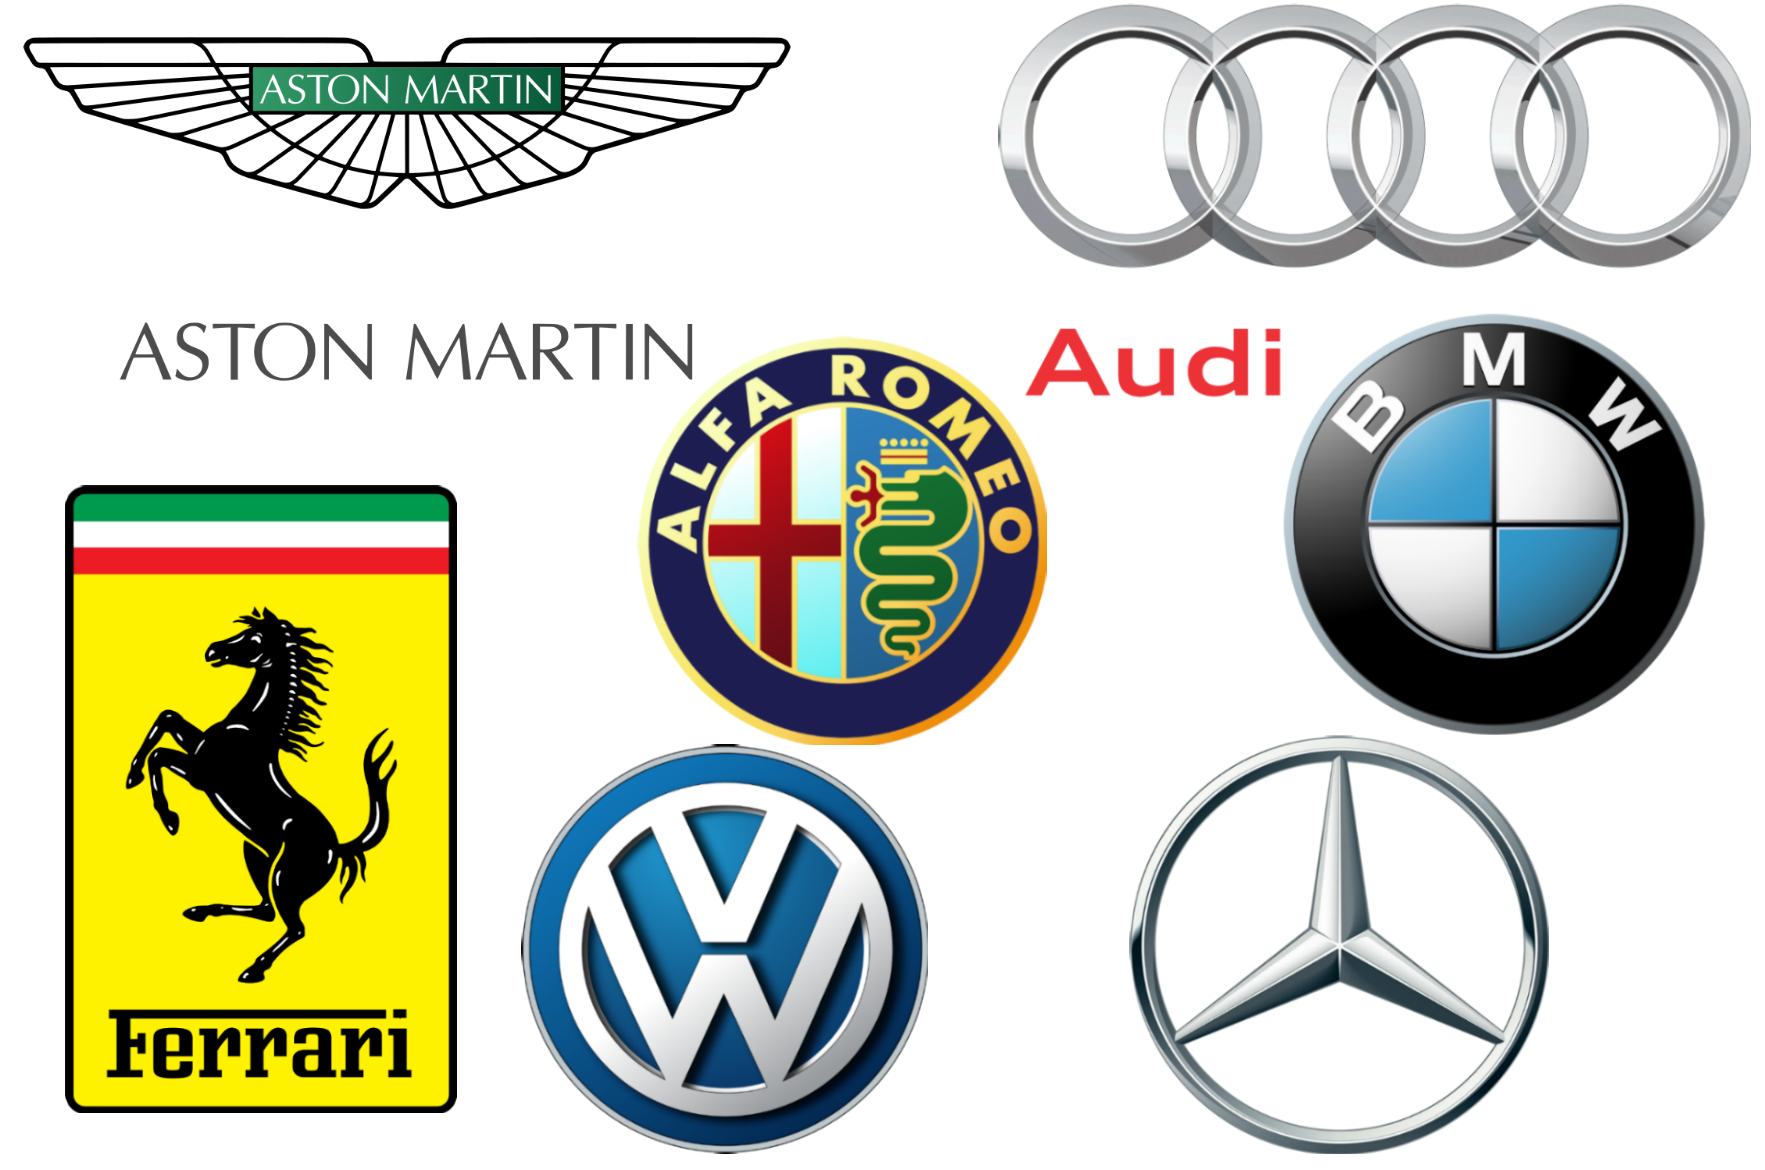 foreign car brands